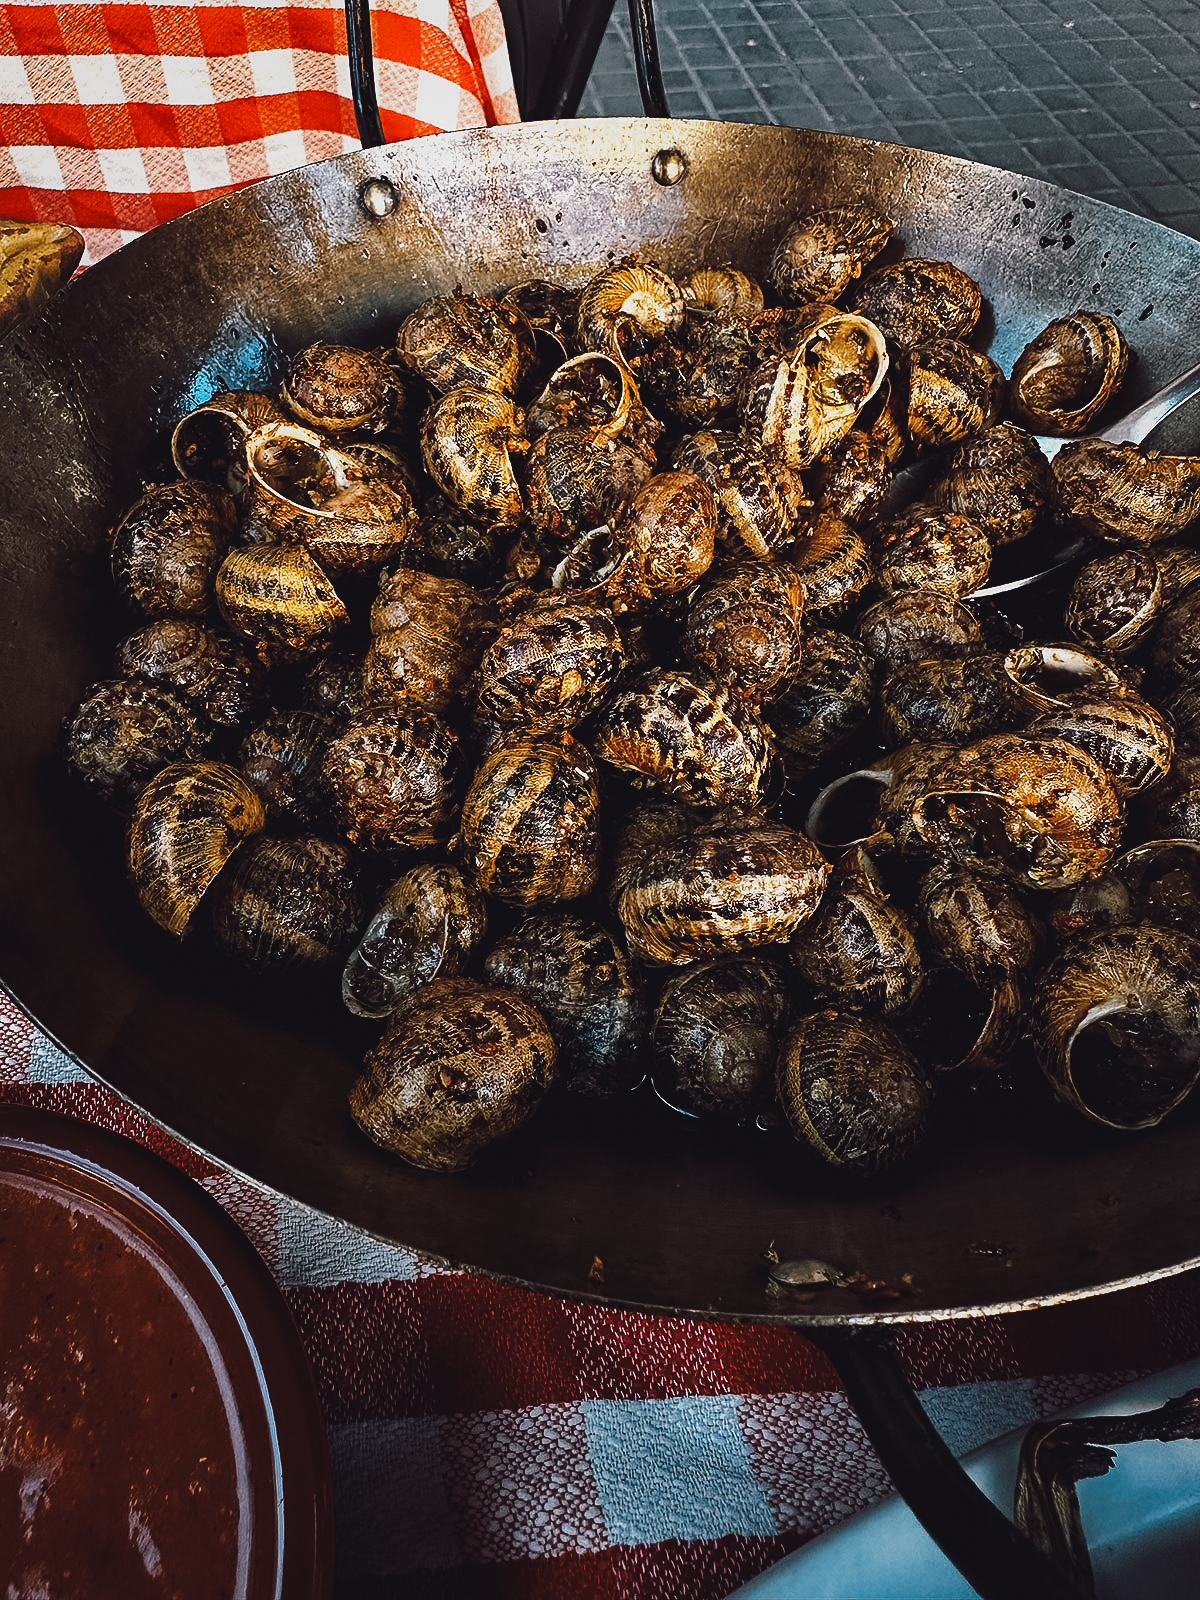 Snails at a restaurant in Barcelona